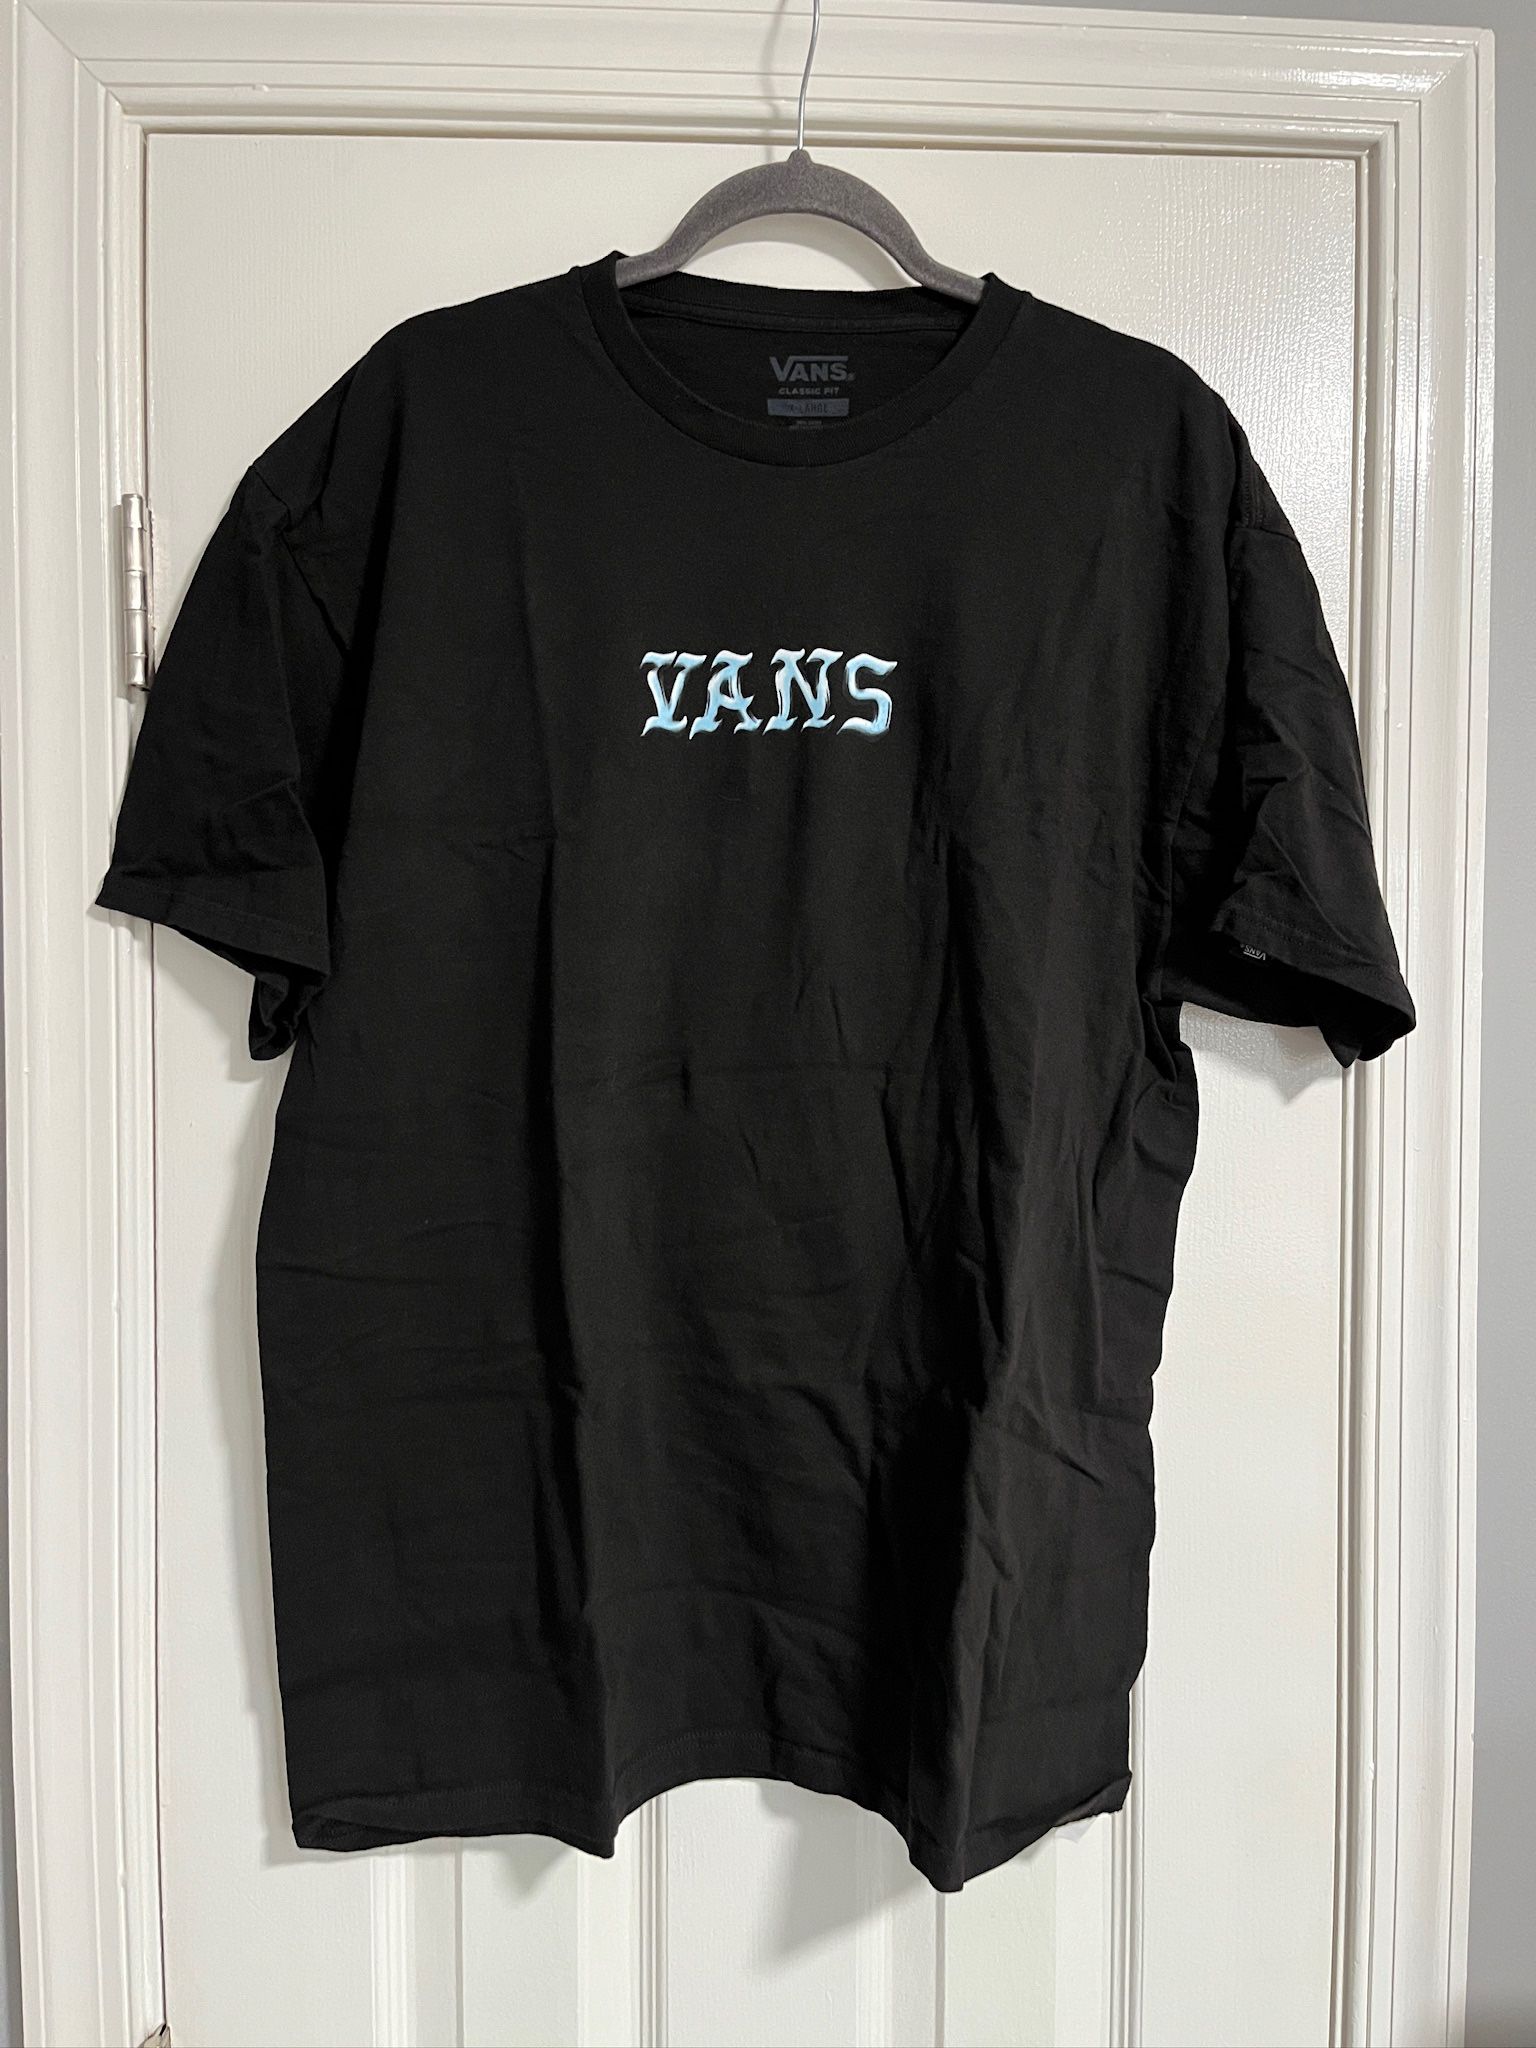 2 NWT Mens VANS T-Shirts Size XL